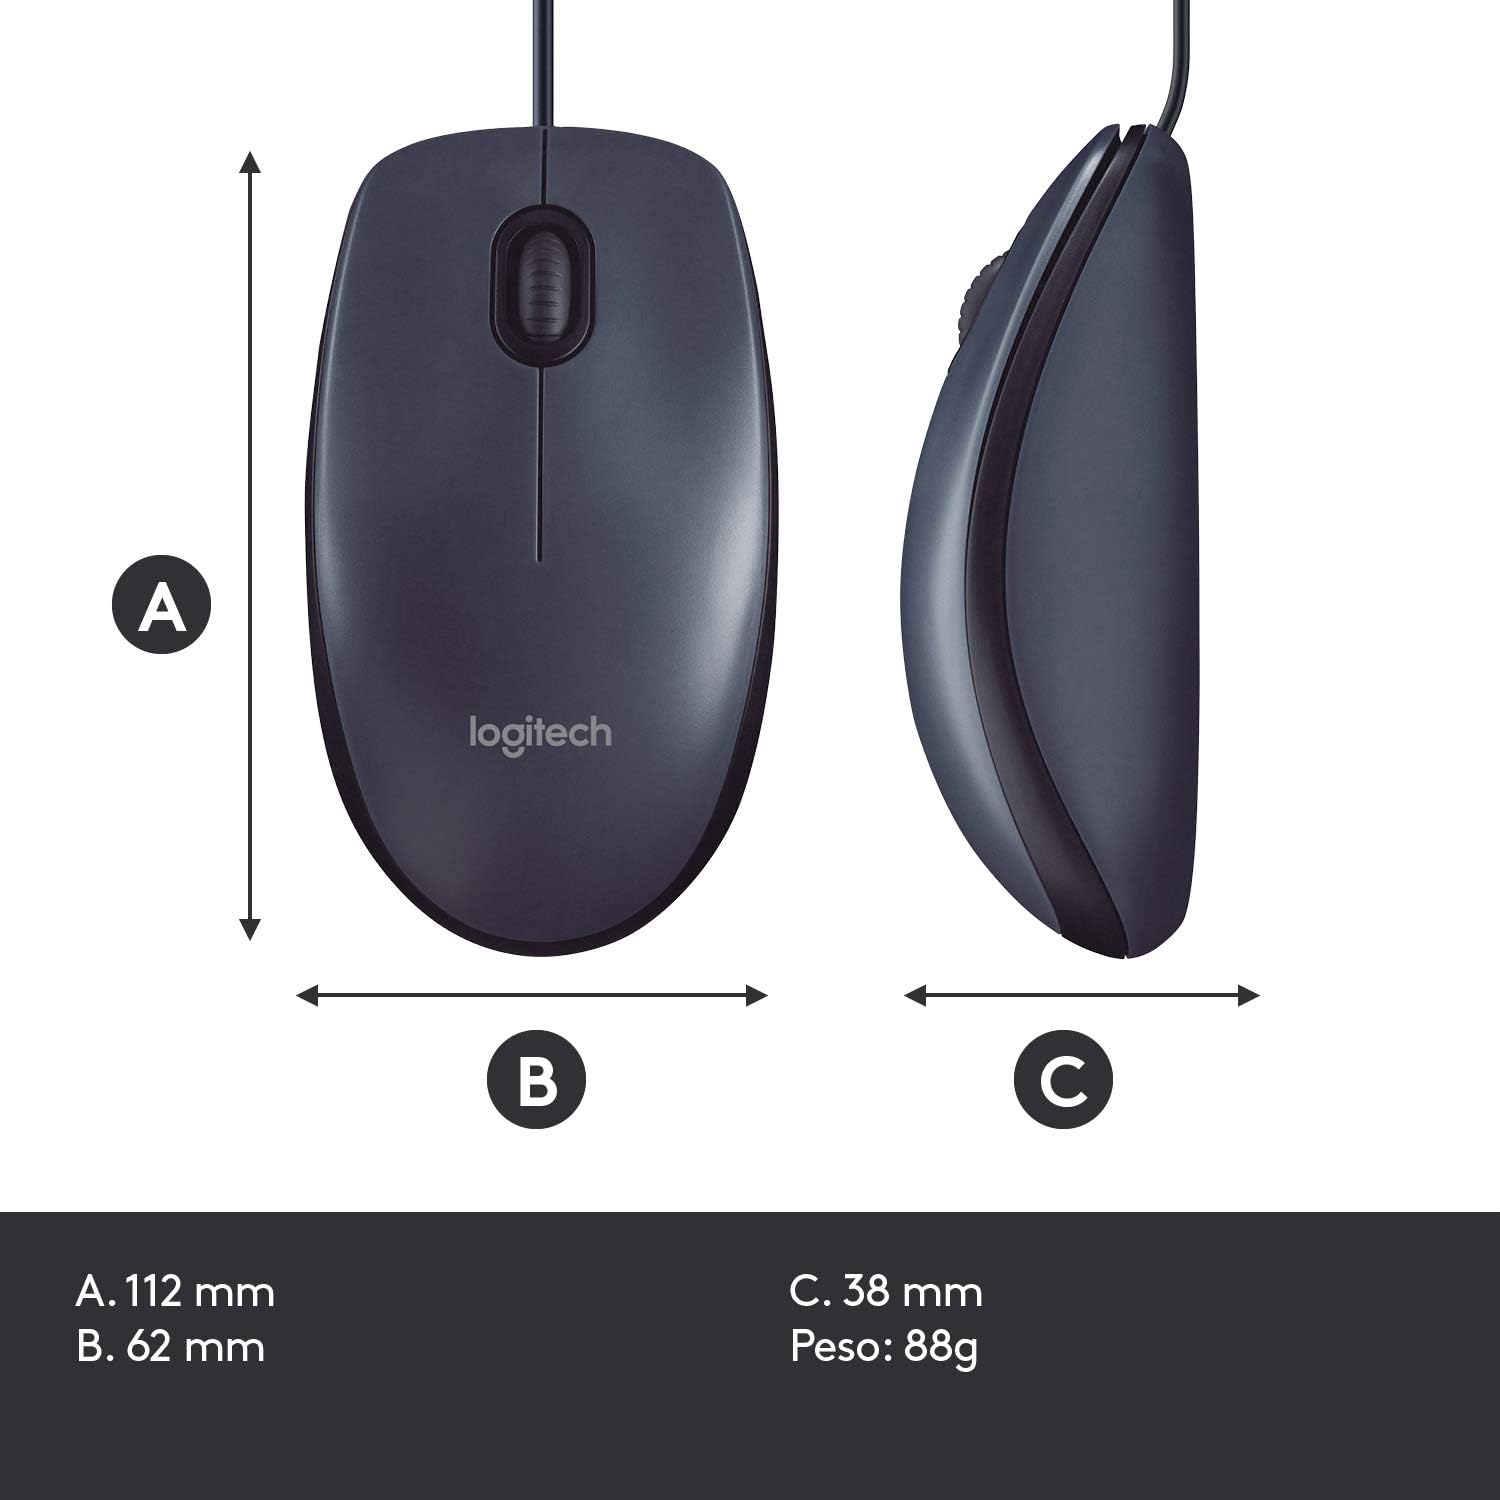 Logitech 910005003 Mouse Usb Standard Ottico M100 Nero